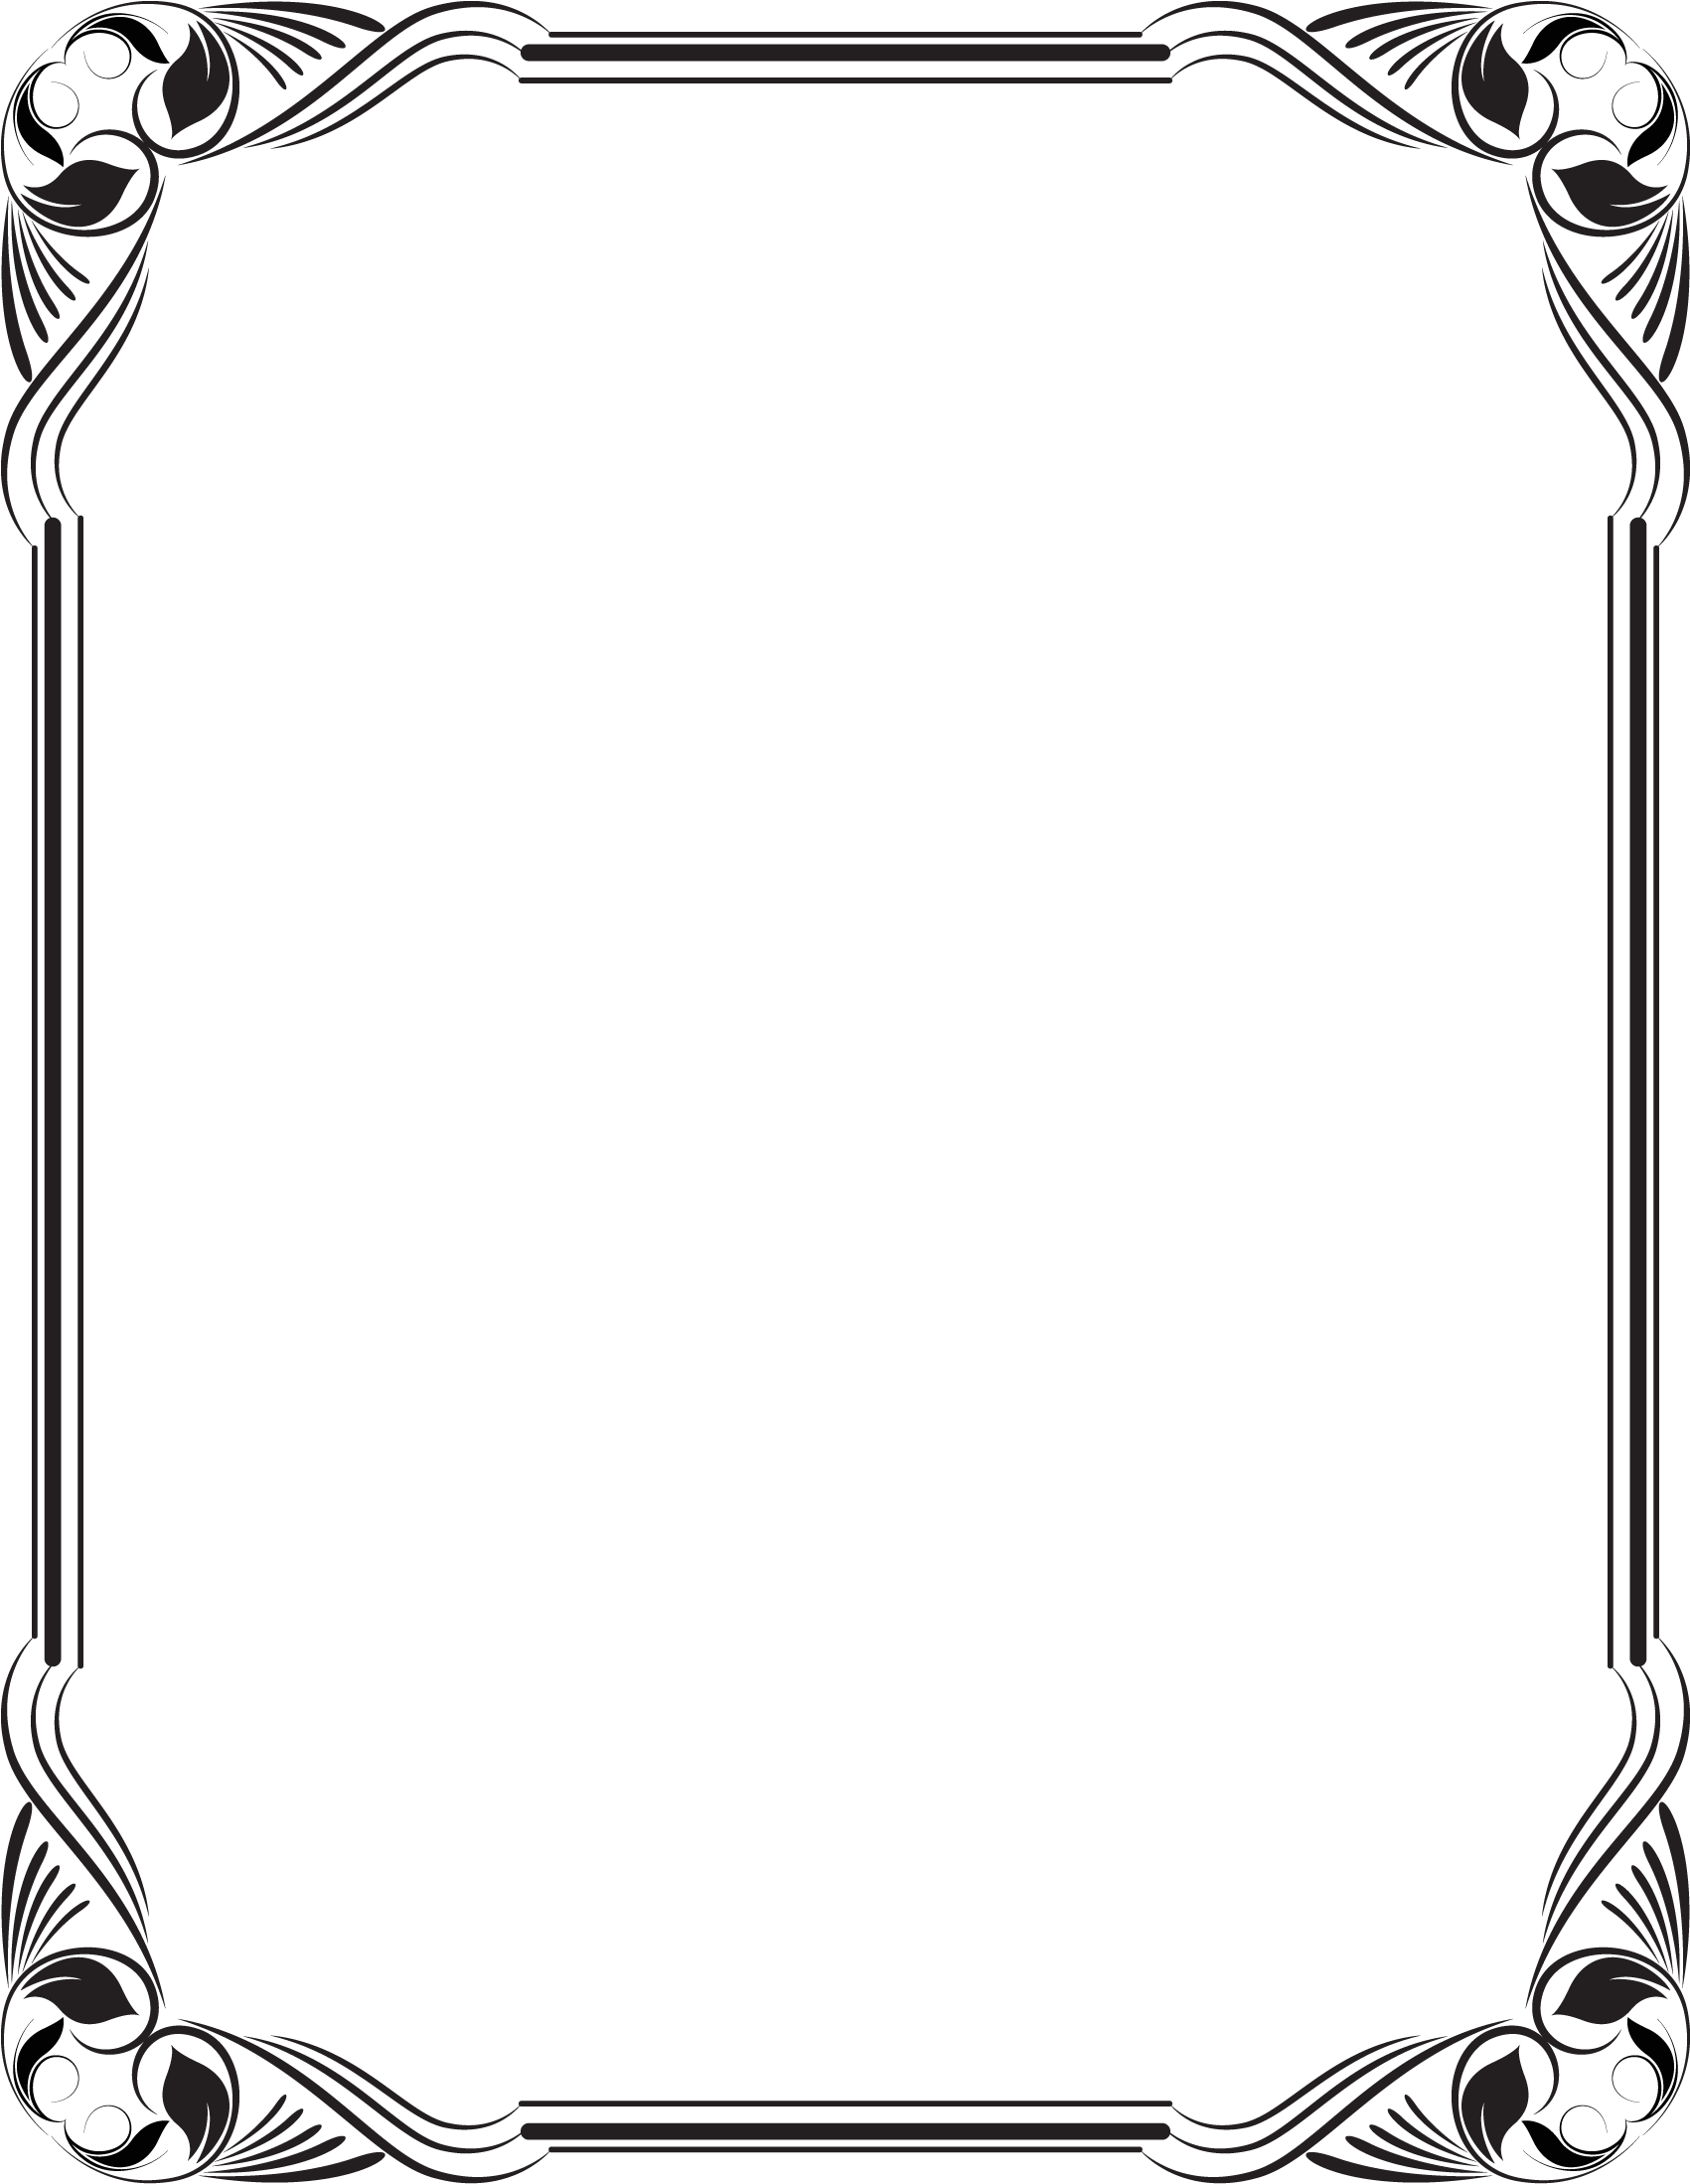 A Black Rectangular Frame With Black Border